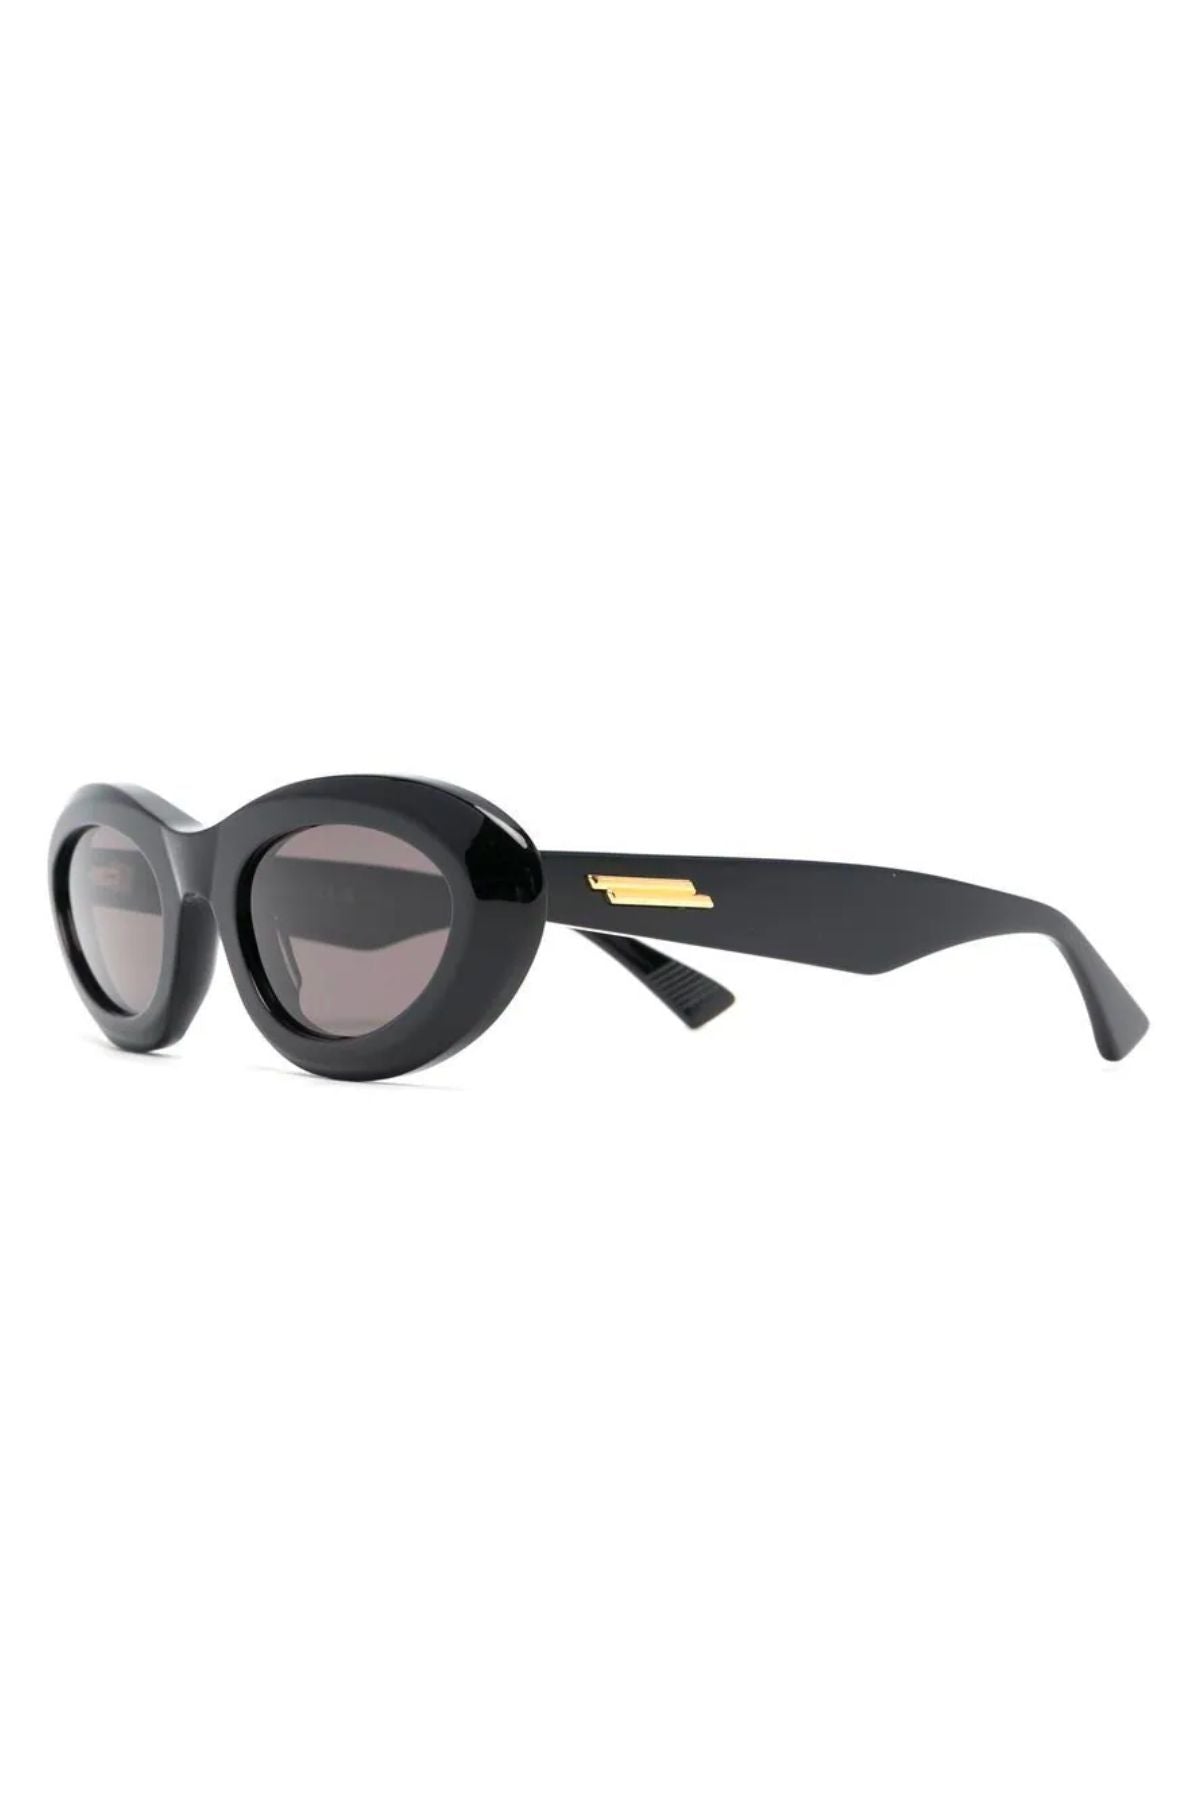 Bottega Veneta Almond Oval Sunglasses - Black